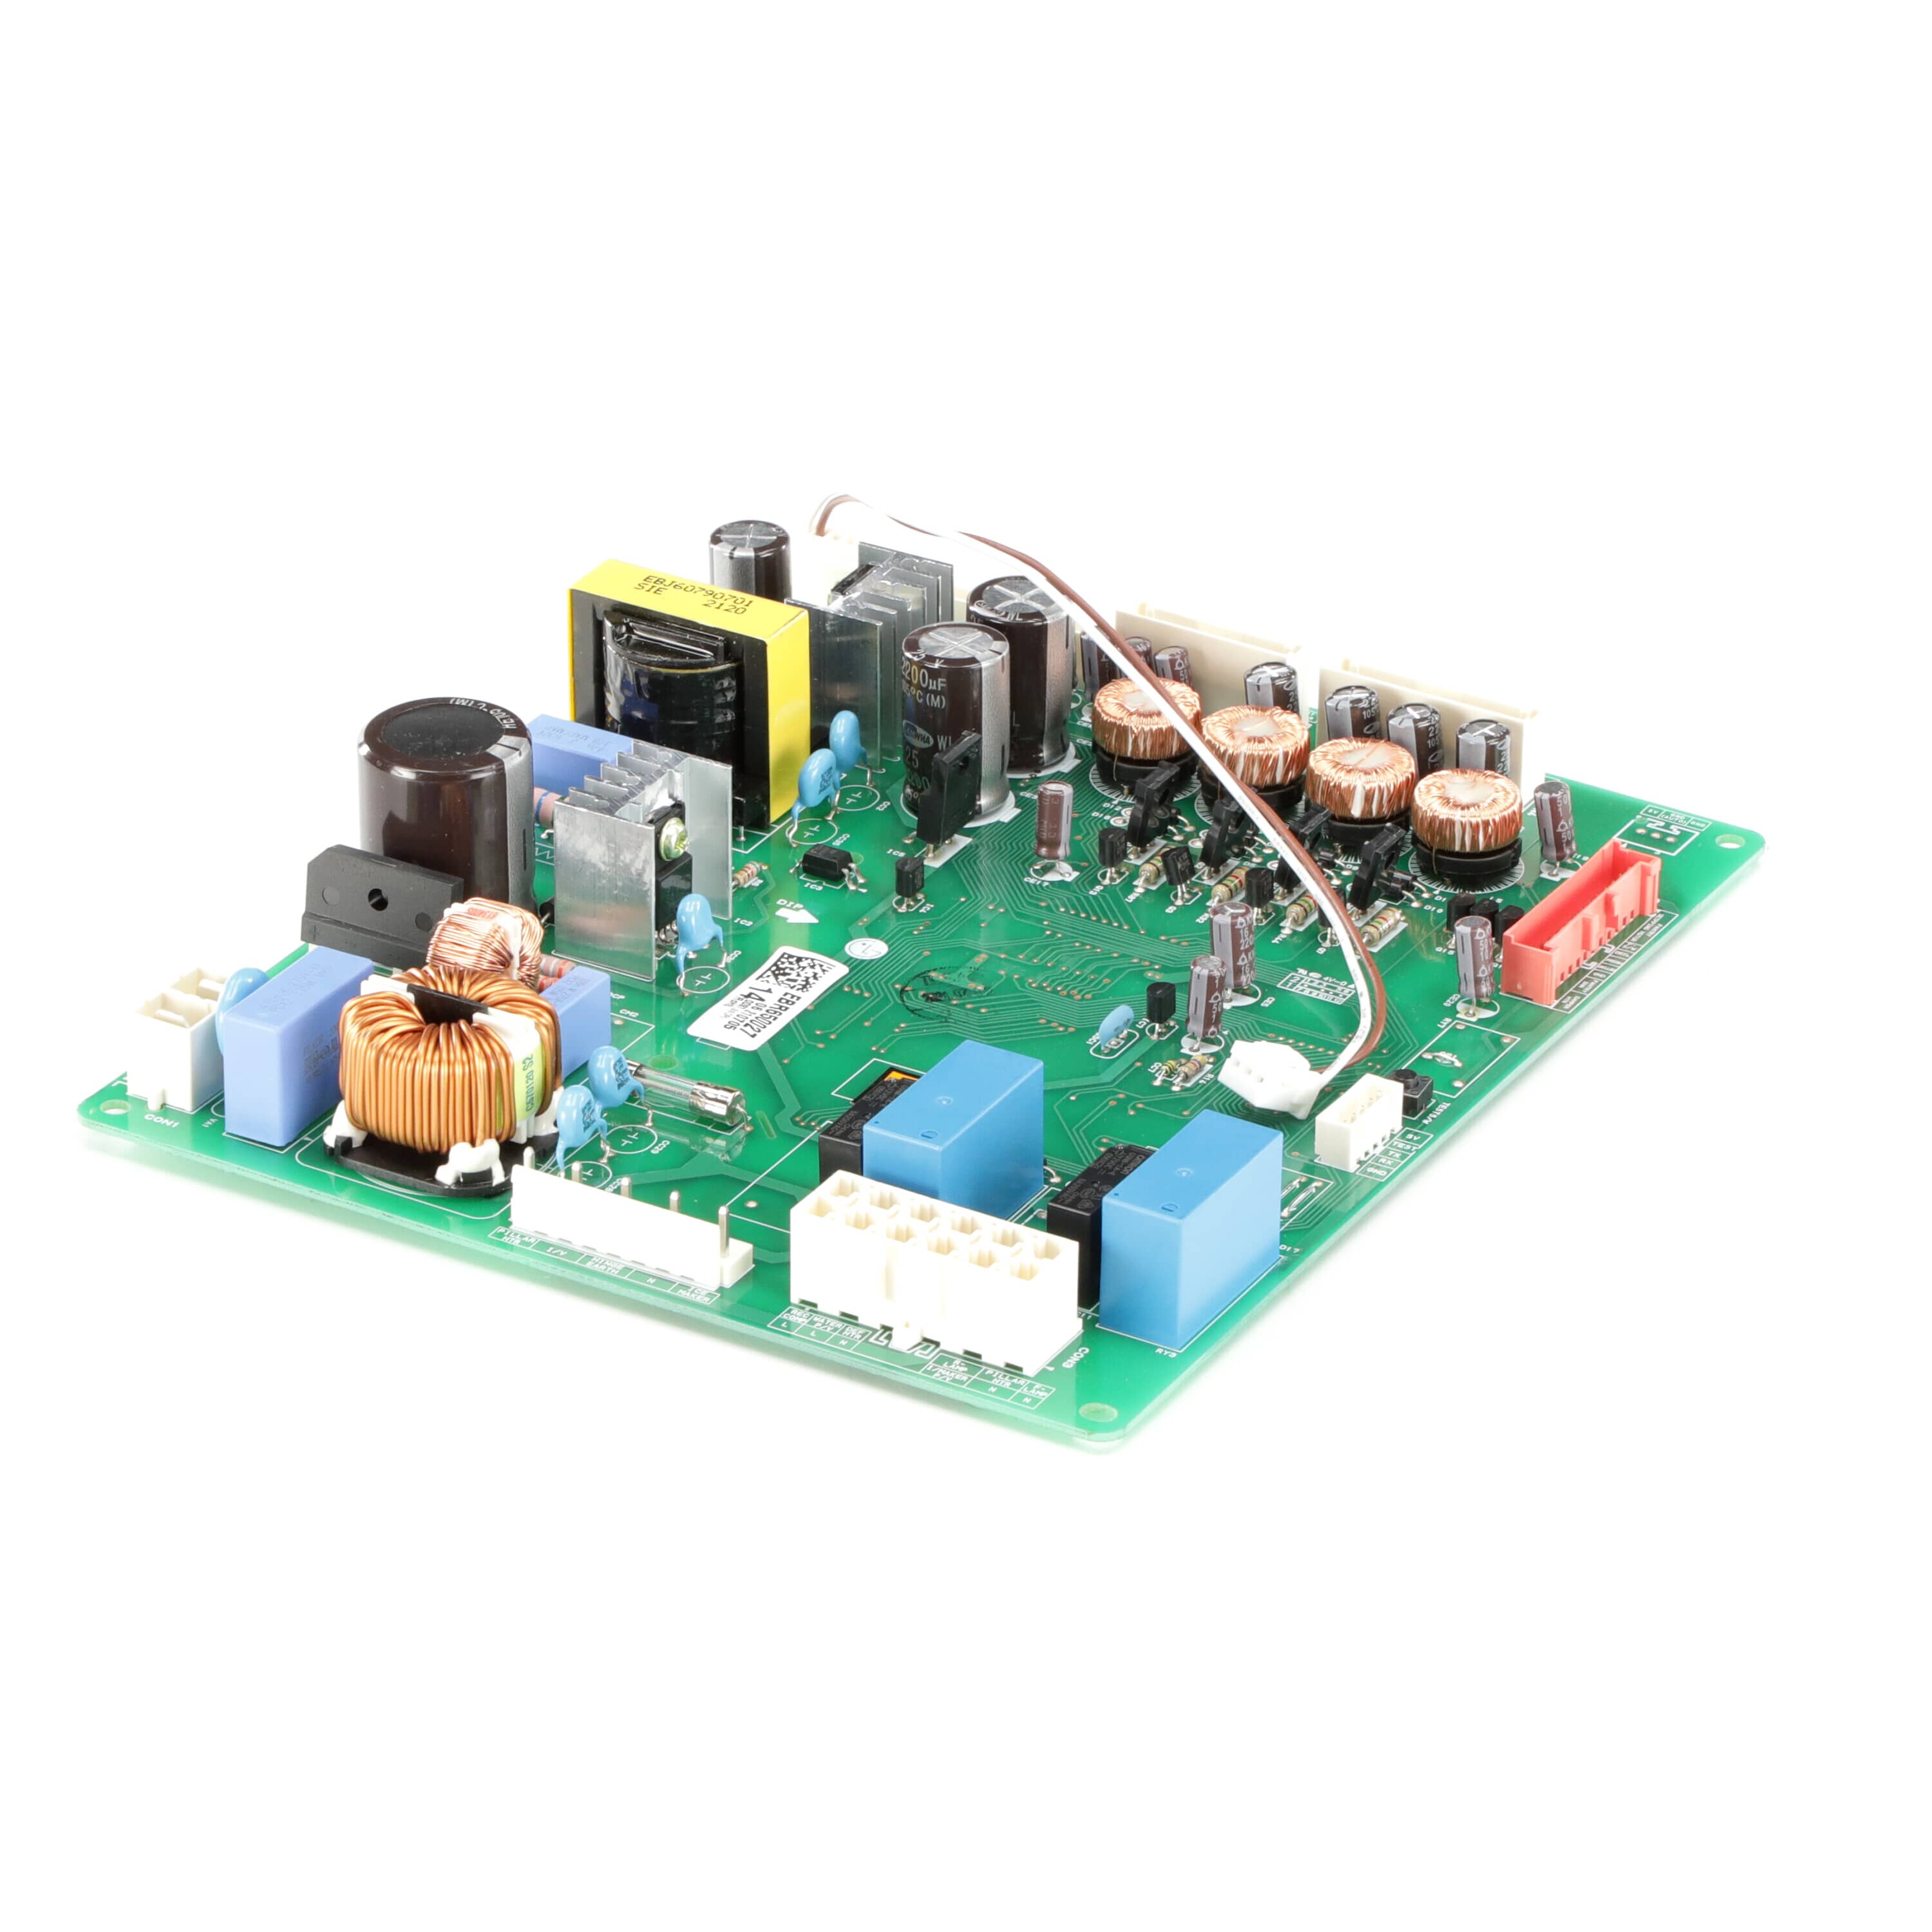 LG EBR65002714 Main PCB Assembly